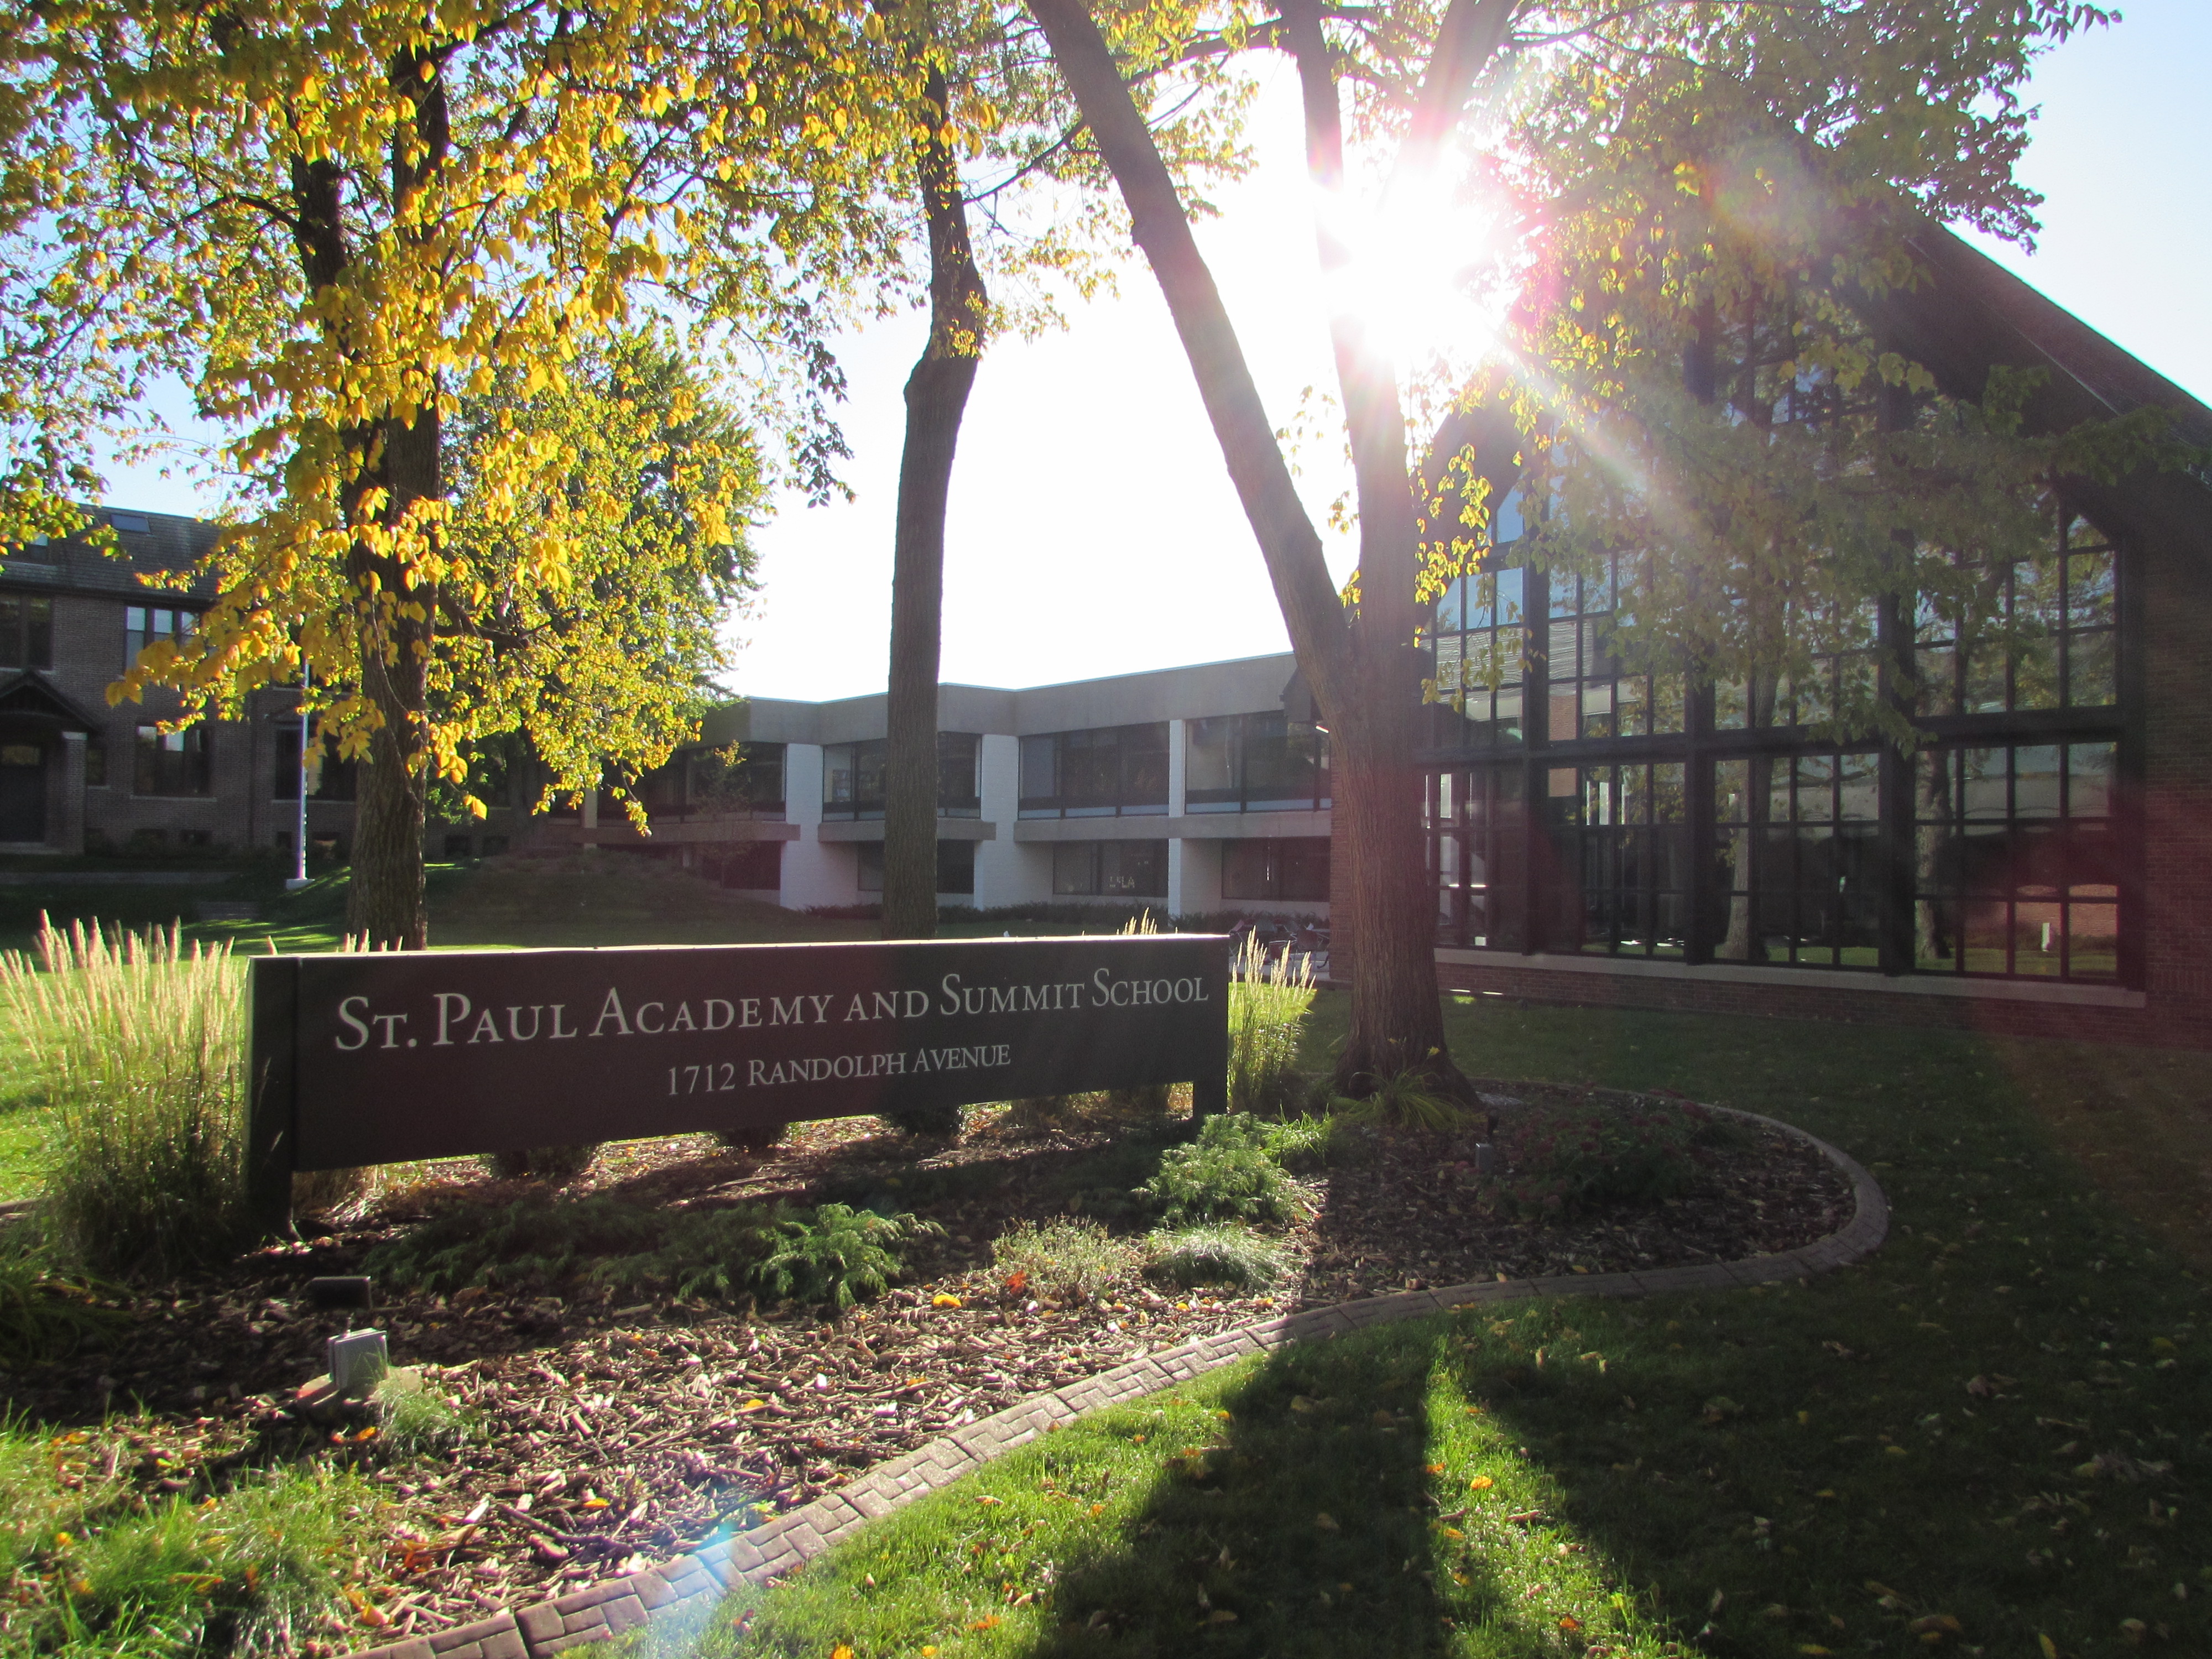 St. Paul Academy and Summit School